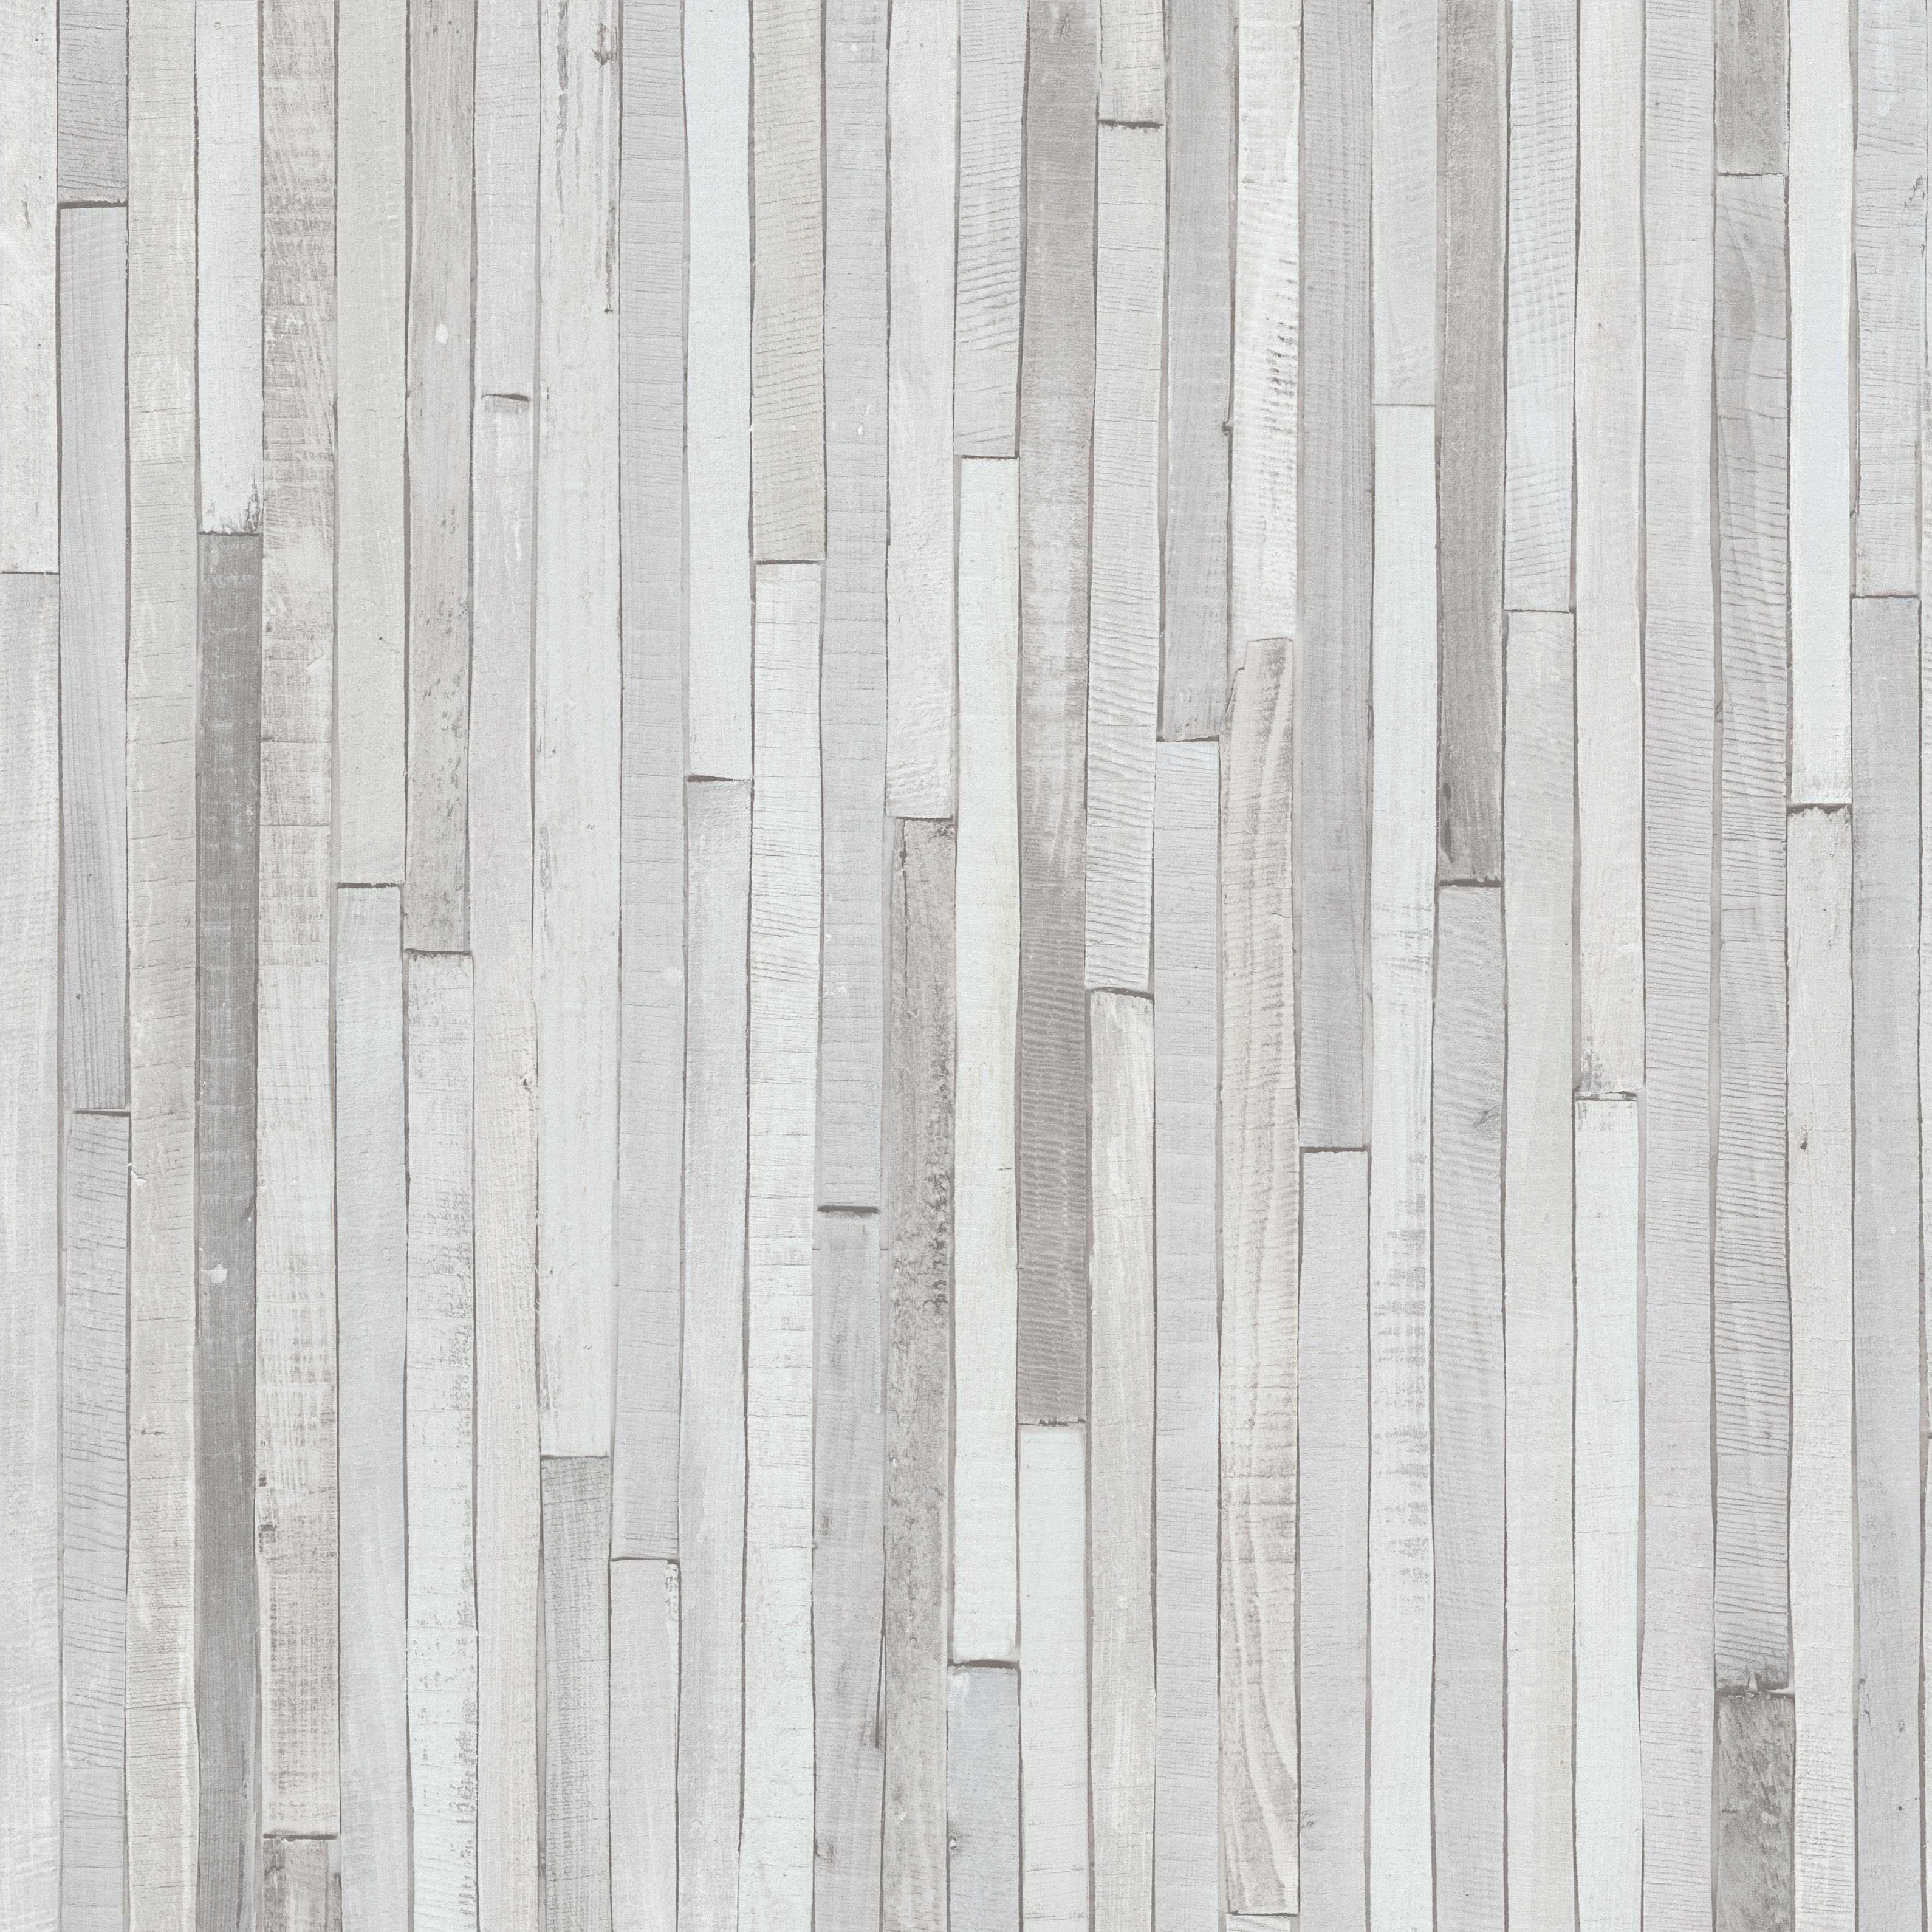 20 White Wood Floor Background Textures - Design Cuts